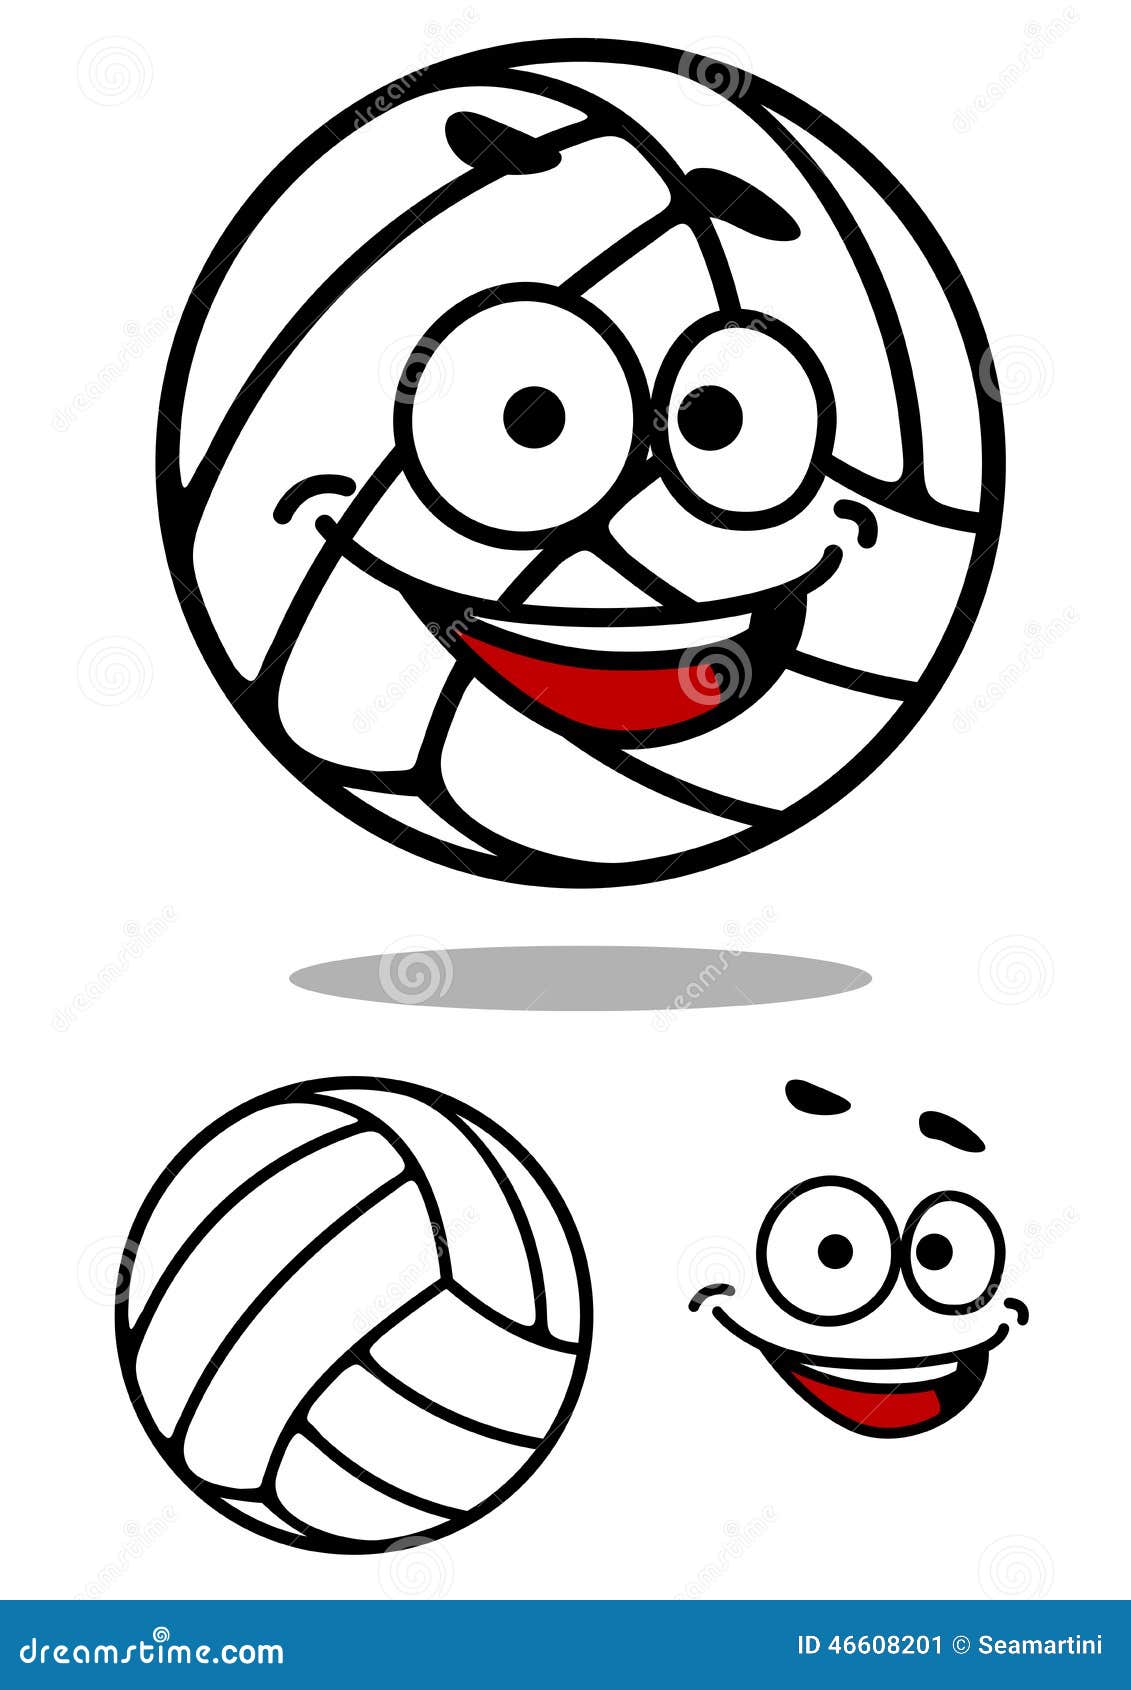 Cartoon Cute Volleyball Ball Stock Vector - Image: 46608201